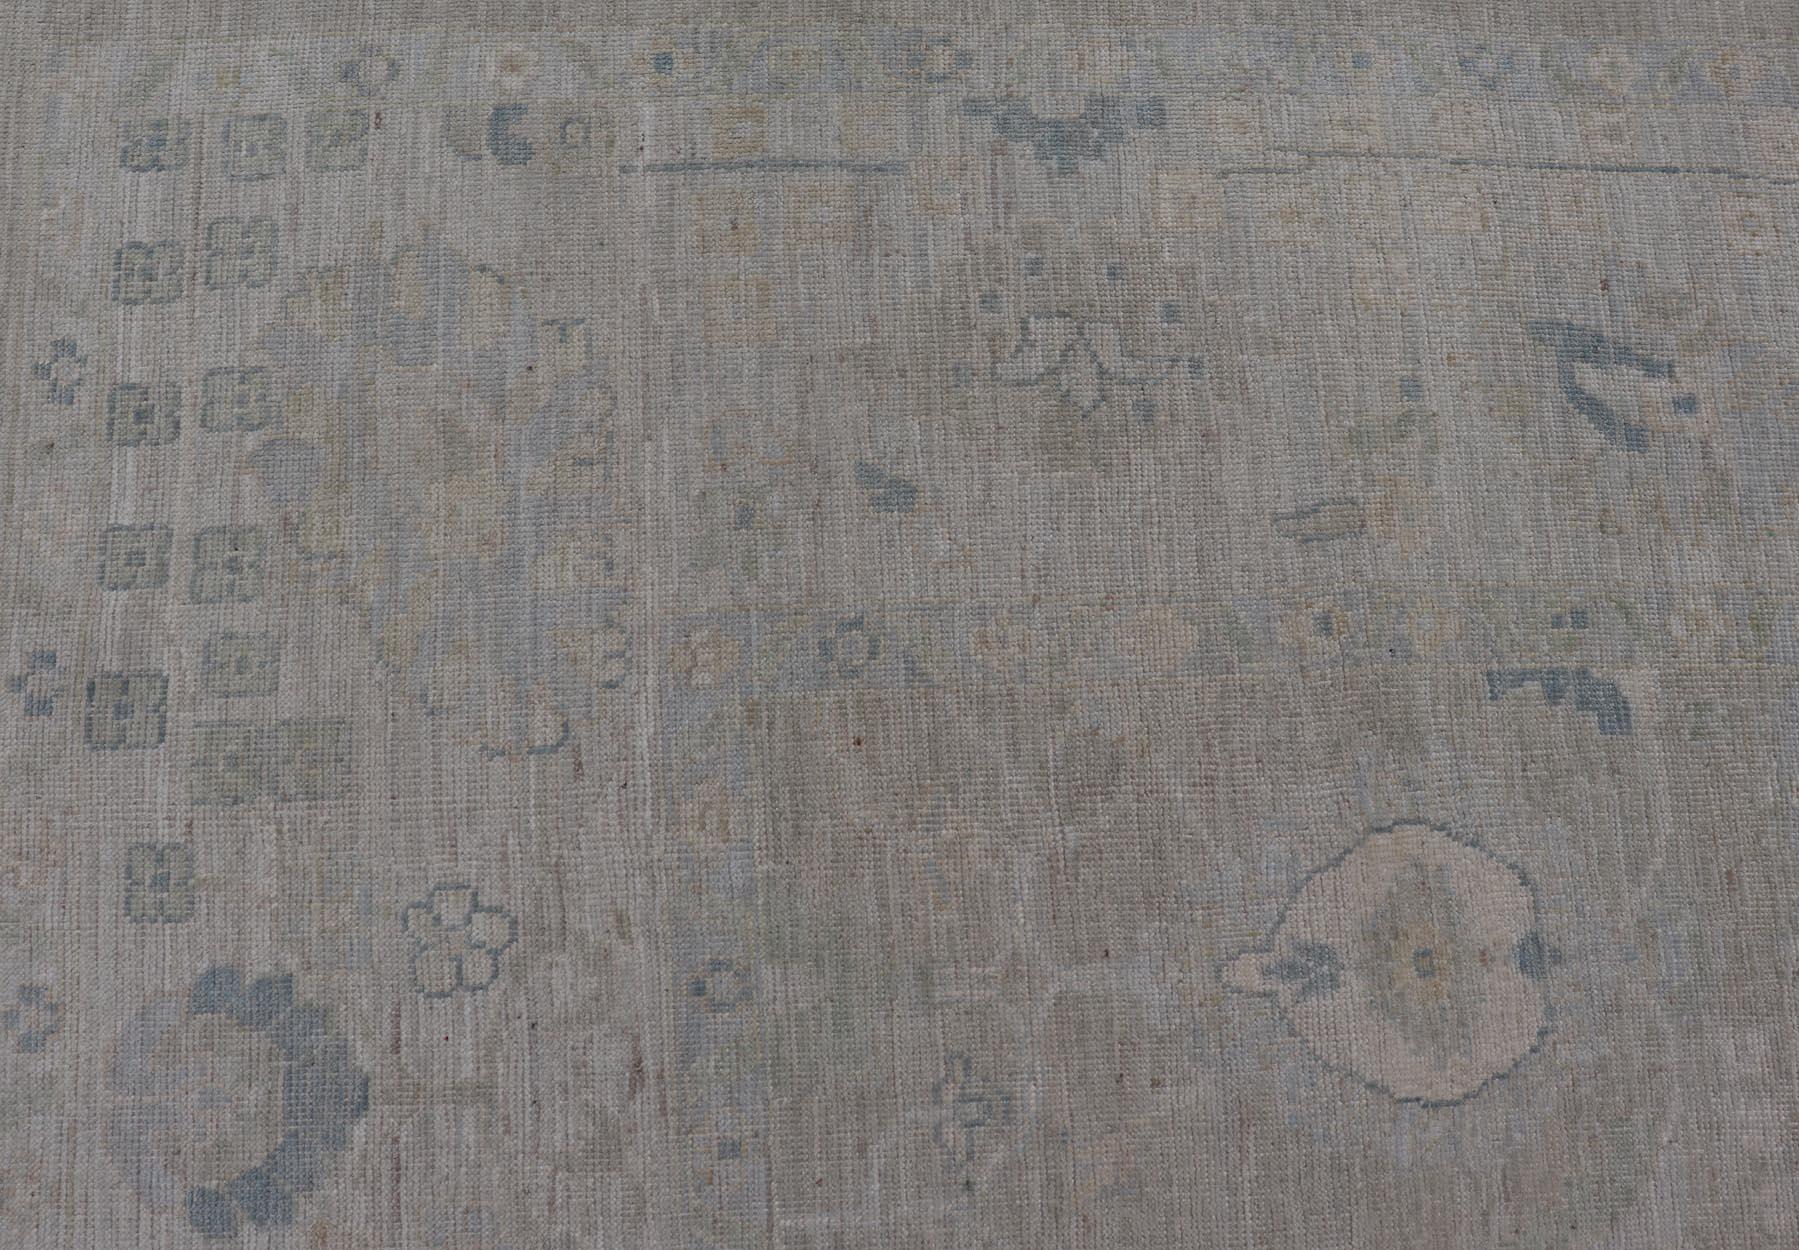 Großes modernes Oushak-Design in Hellblau, Grün, mit hellcremefarbenem Hintergrund. Keivan Woven Arts; Teppich AWR-12521 Herkunftsland: Afghanistan  Art: Oushak   Design/One: All-Over, Floral.
Maße: 11'9 x 17'10 
Dieses rustikale Stück versprüht